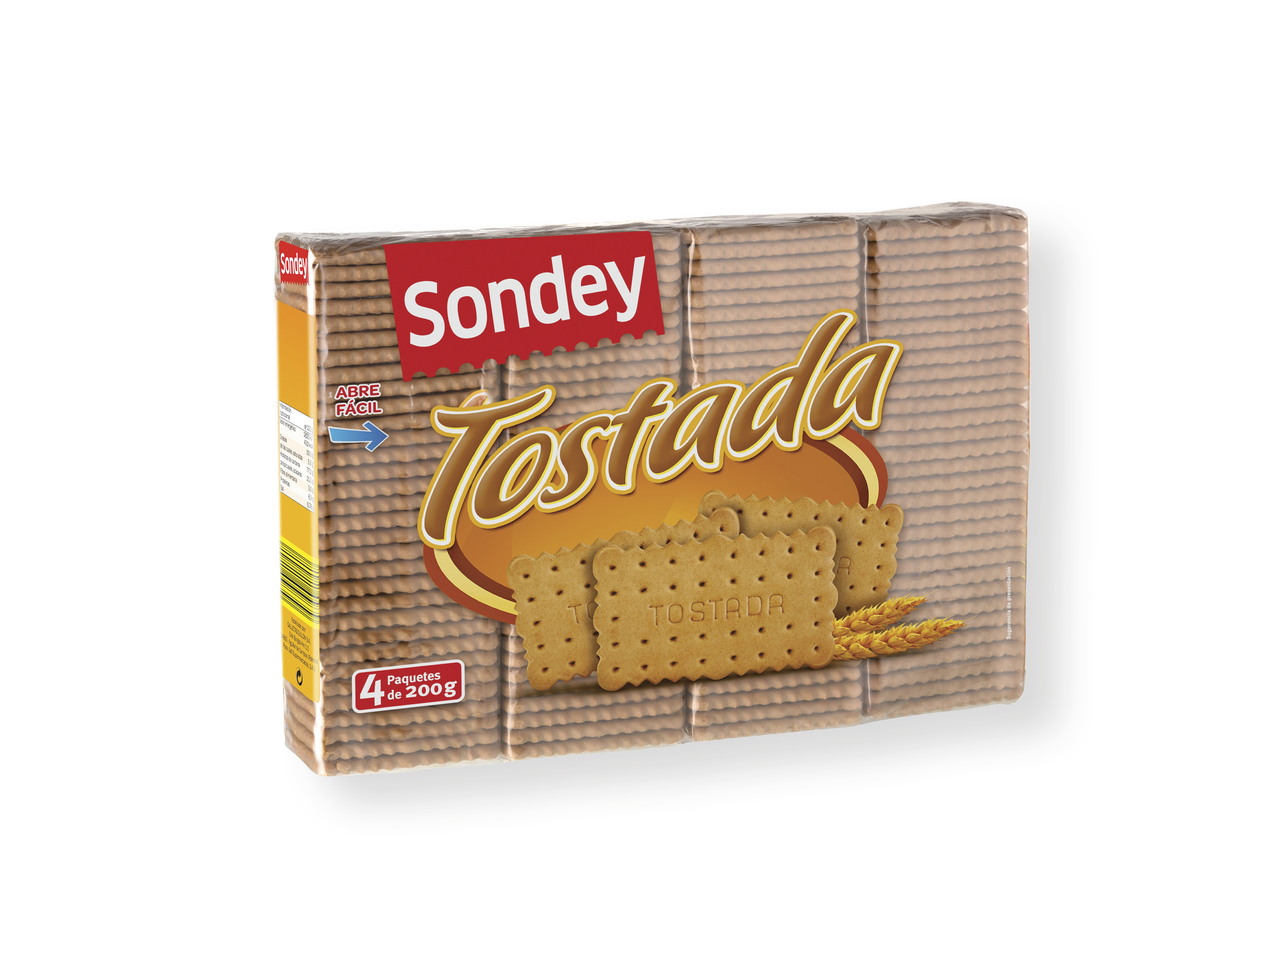 'Sondey(R)' Galletas tostadas